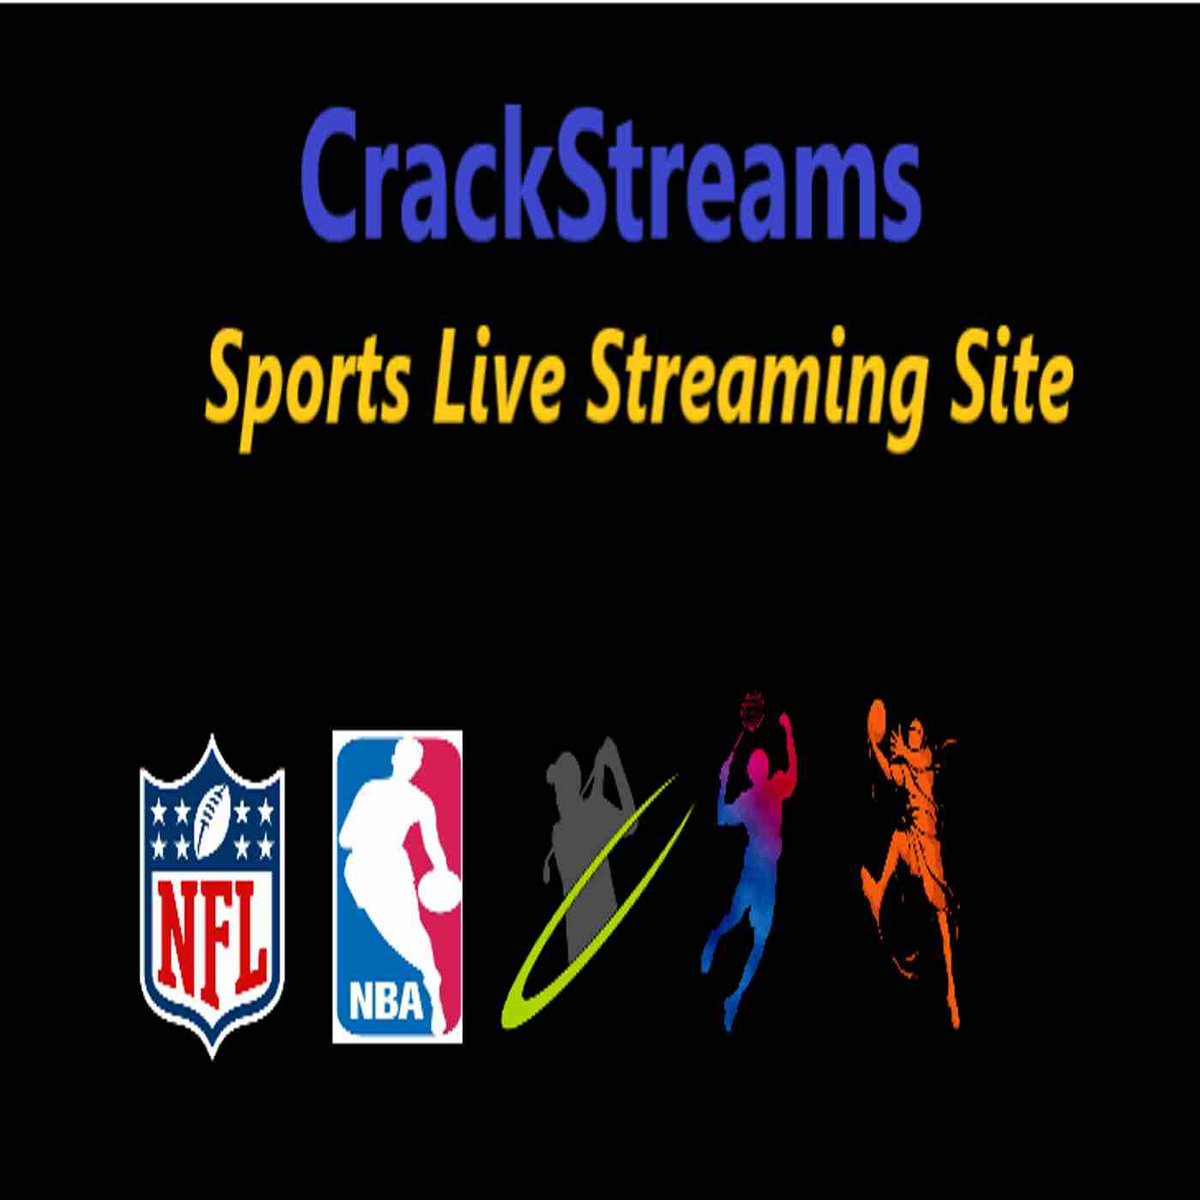 www live cricket streaming com